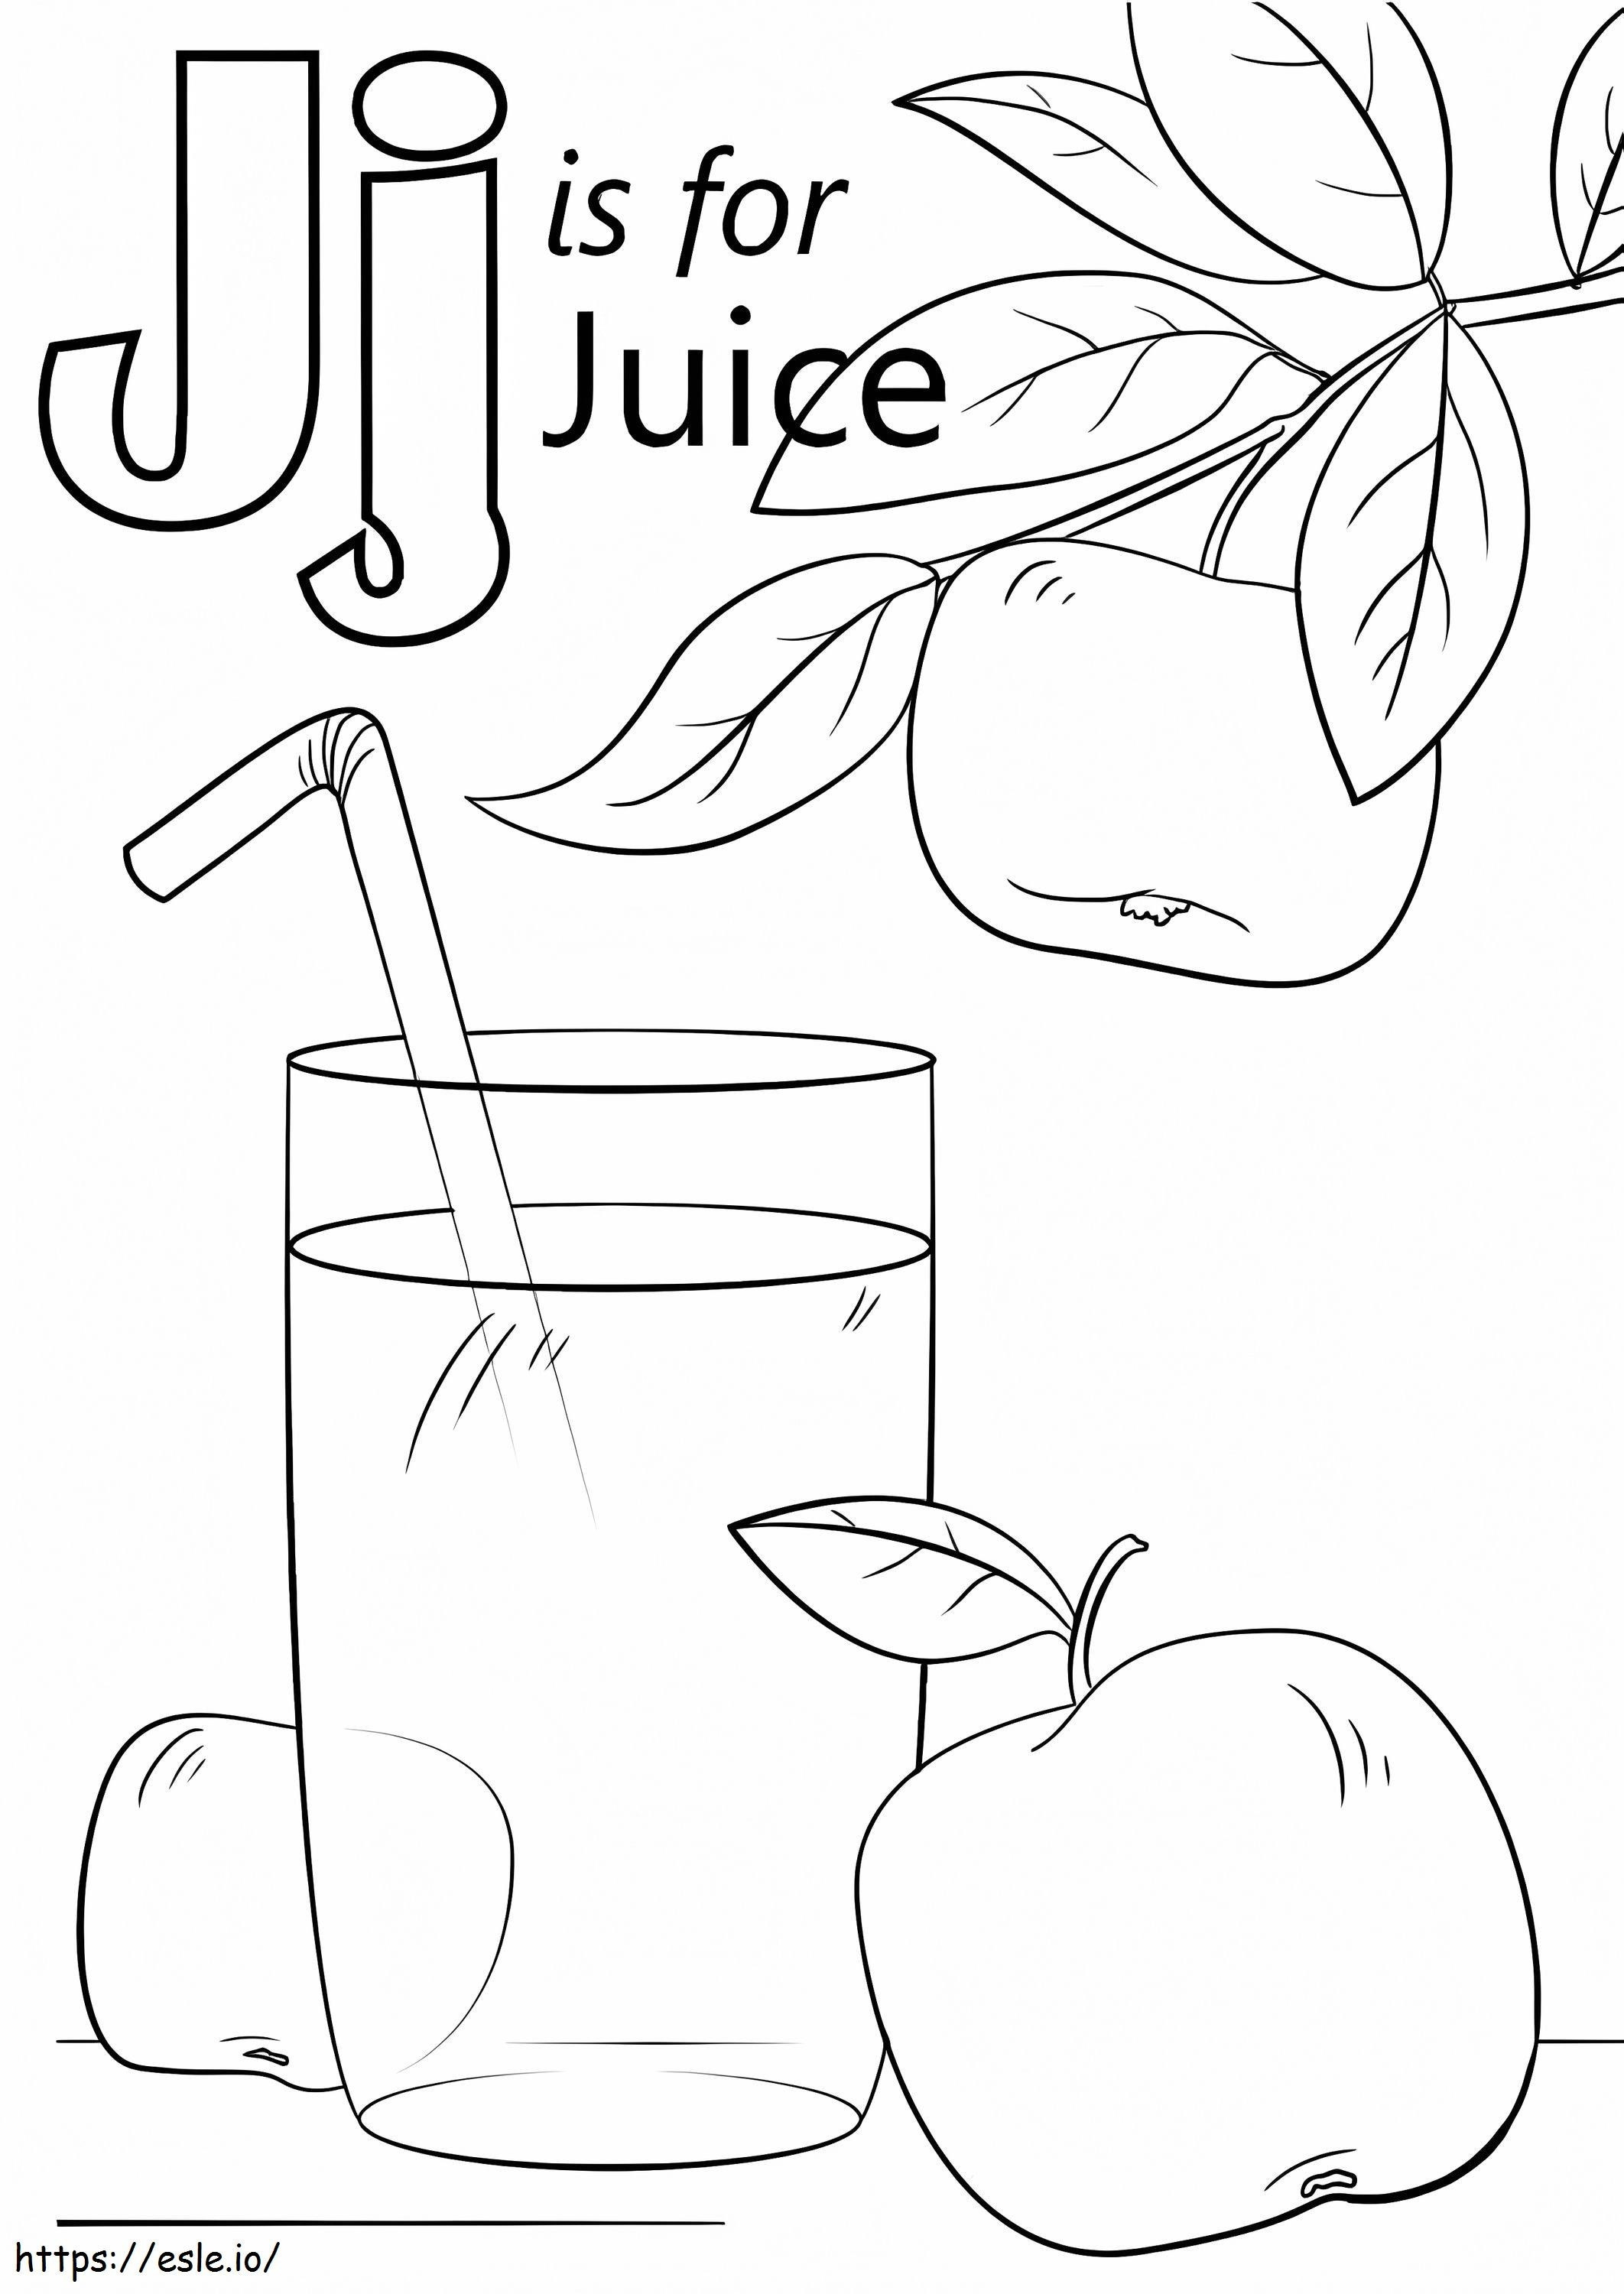 Juice Letter J coloring page